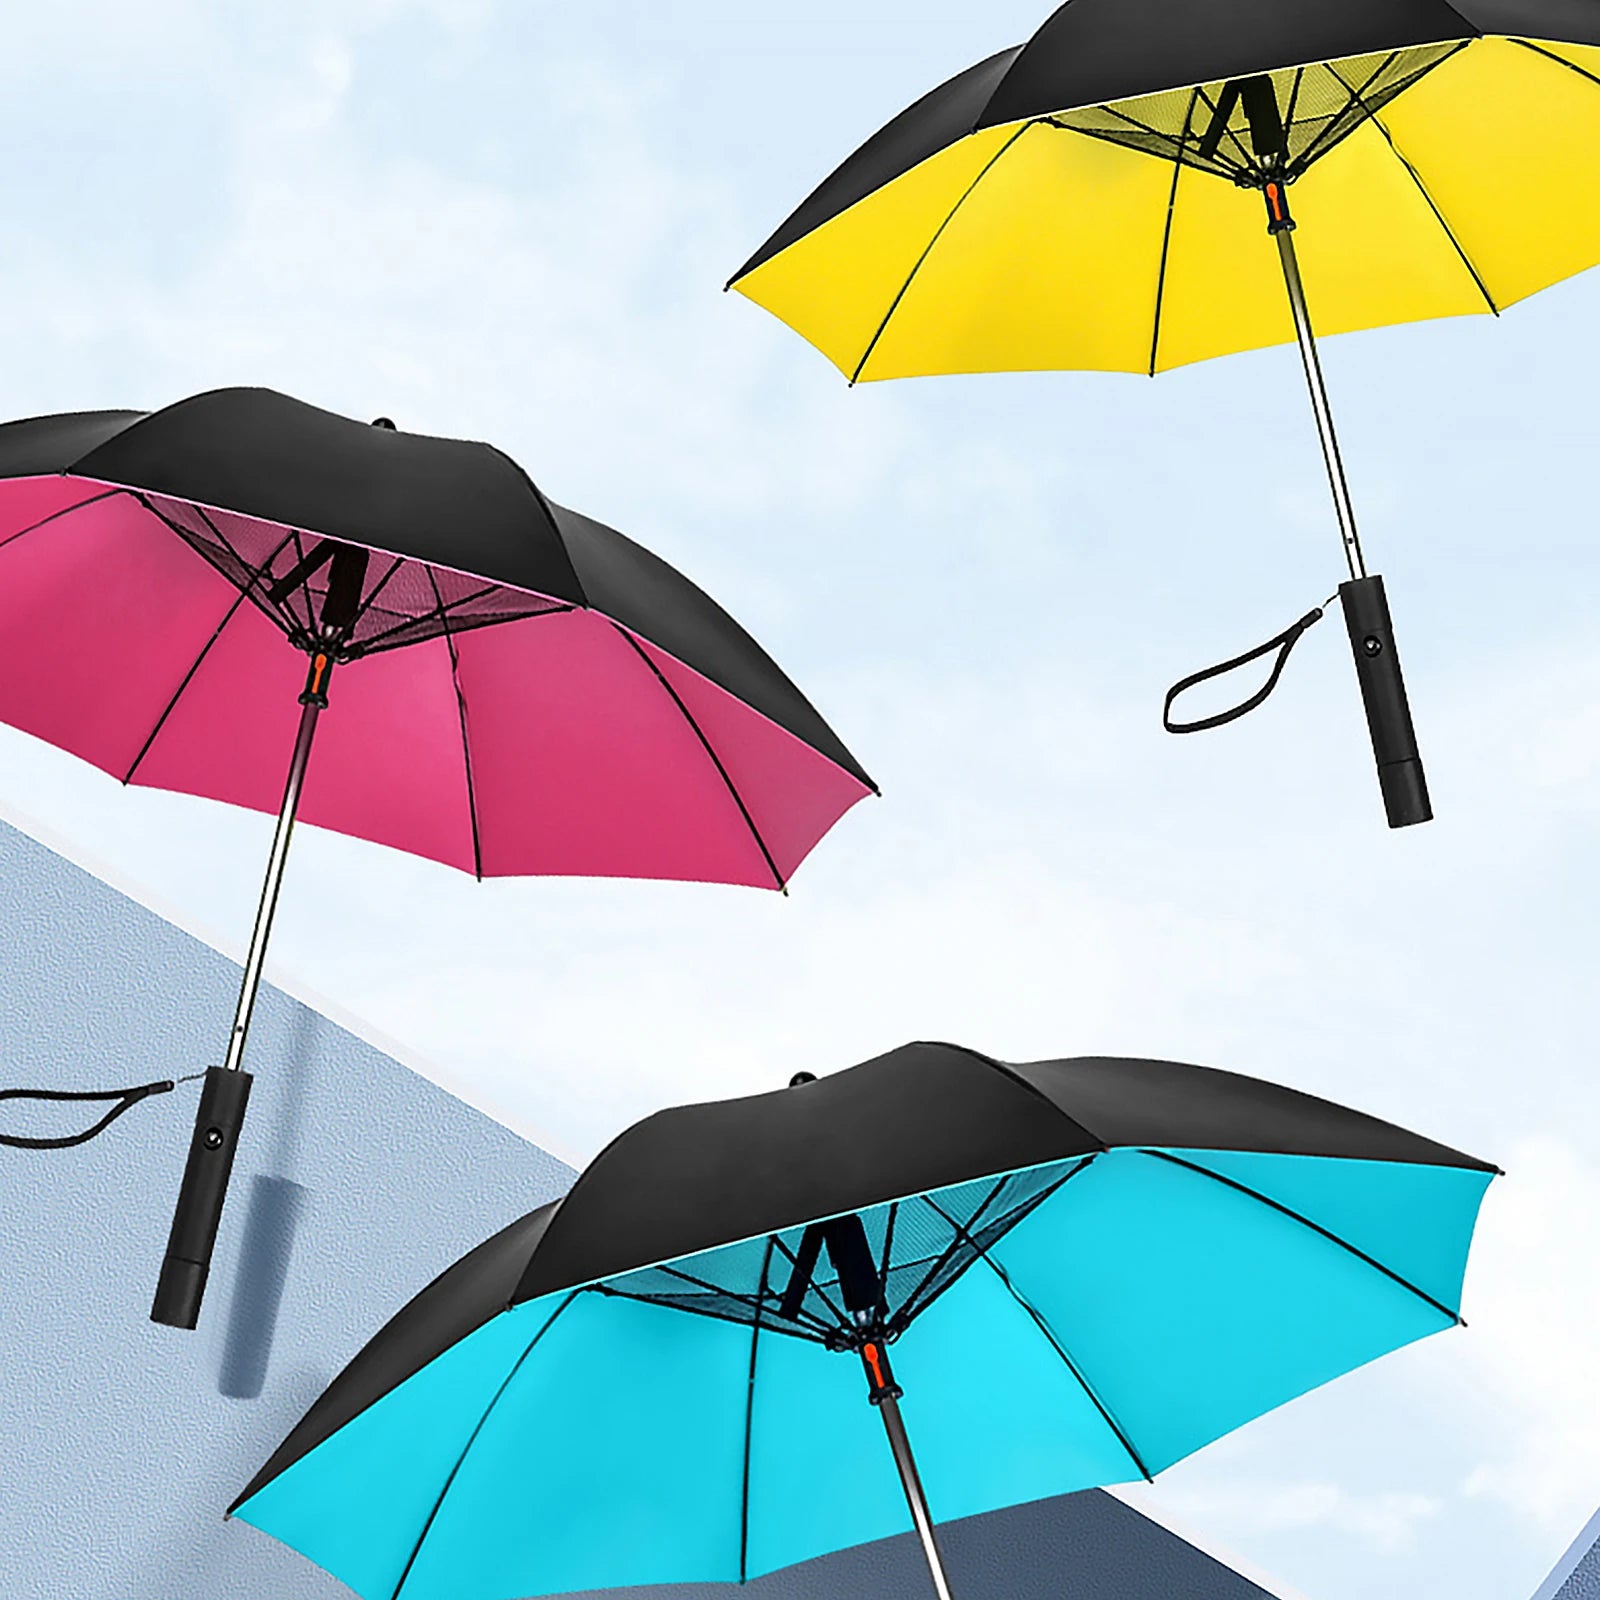 Vibrant Umbrellas: Portable, UV-Protective Umbrellas with Rechargeable Fan